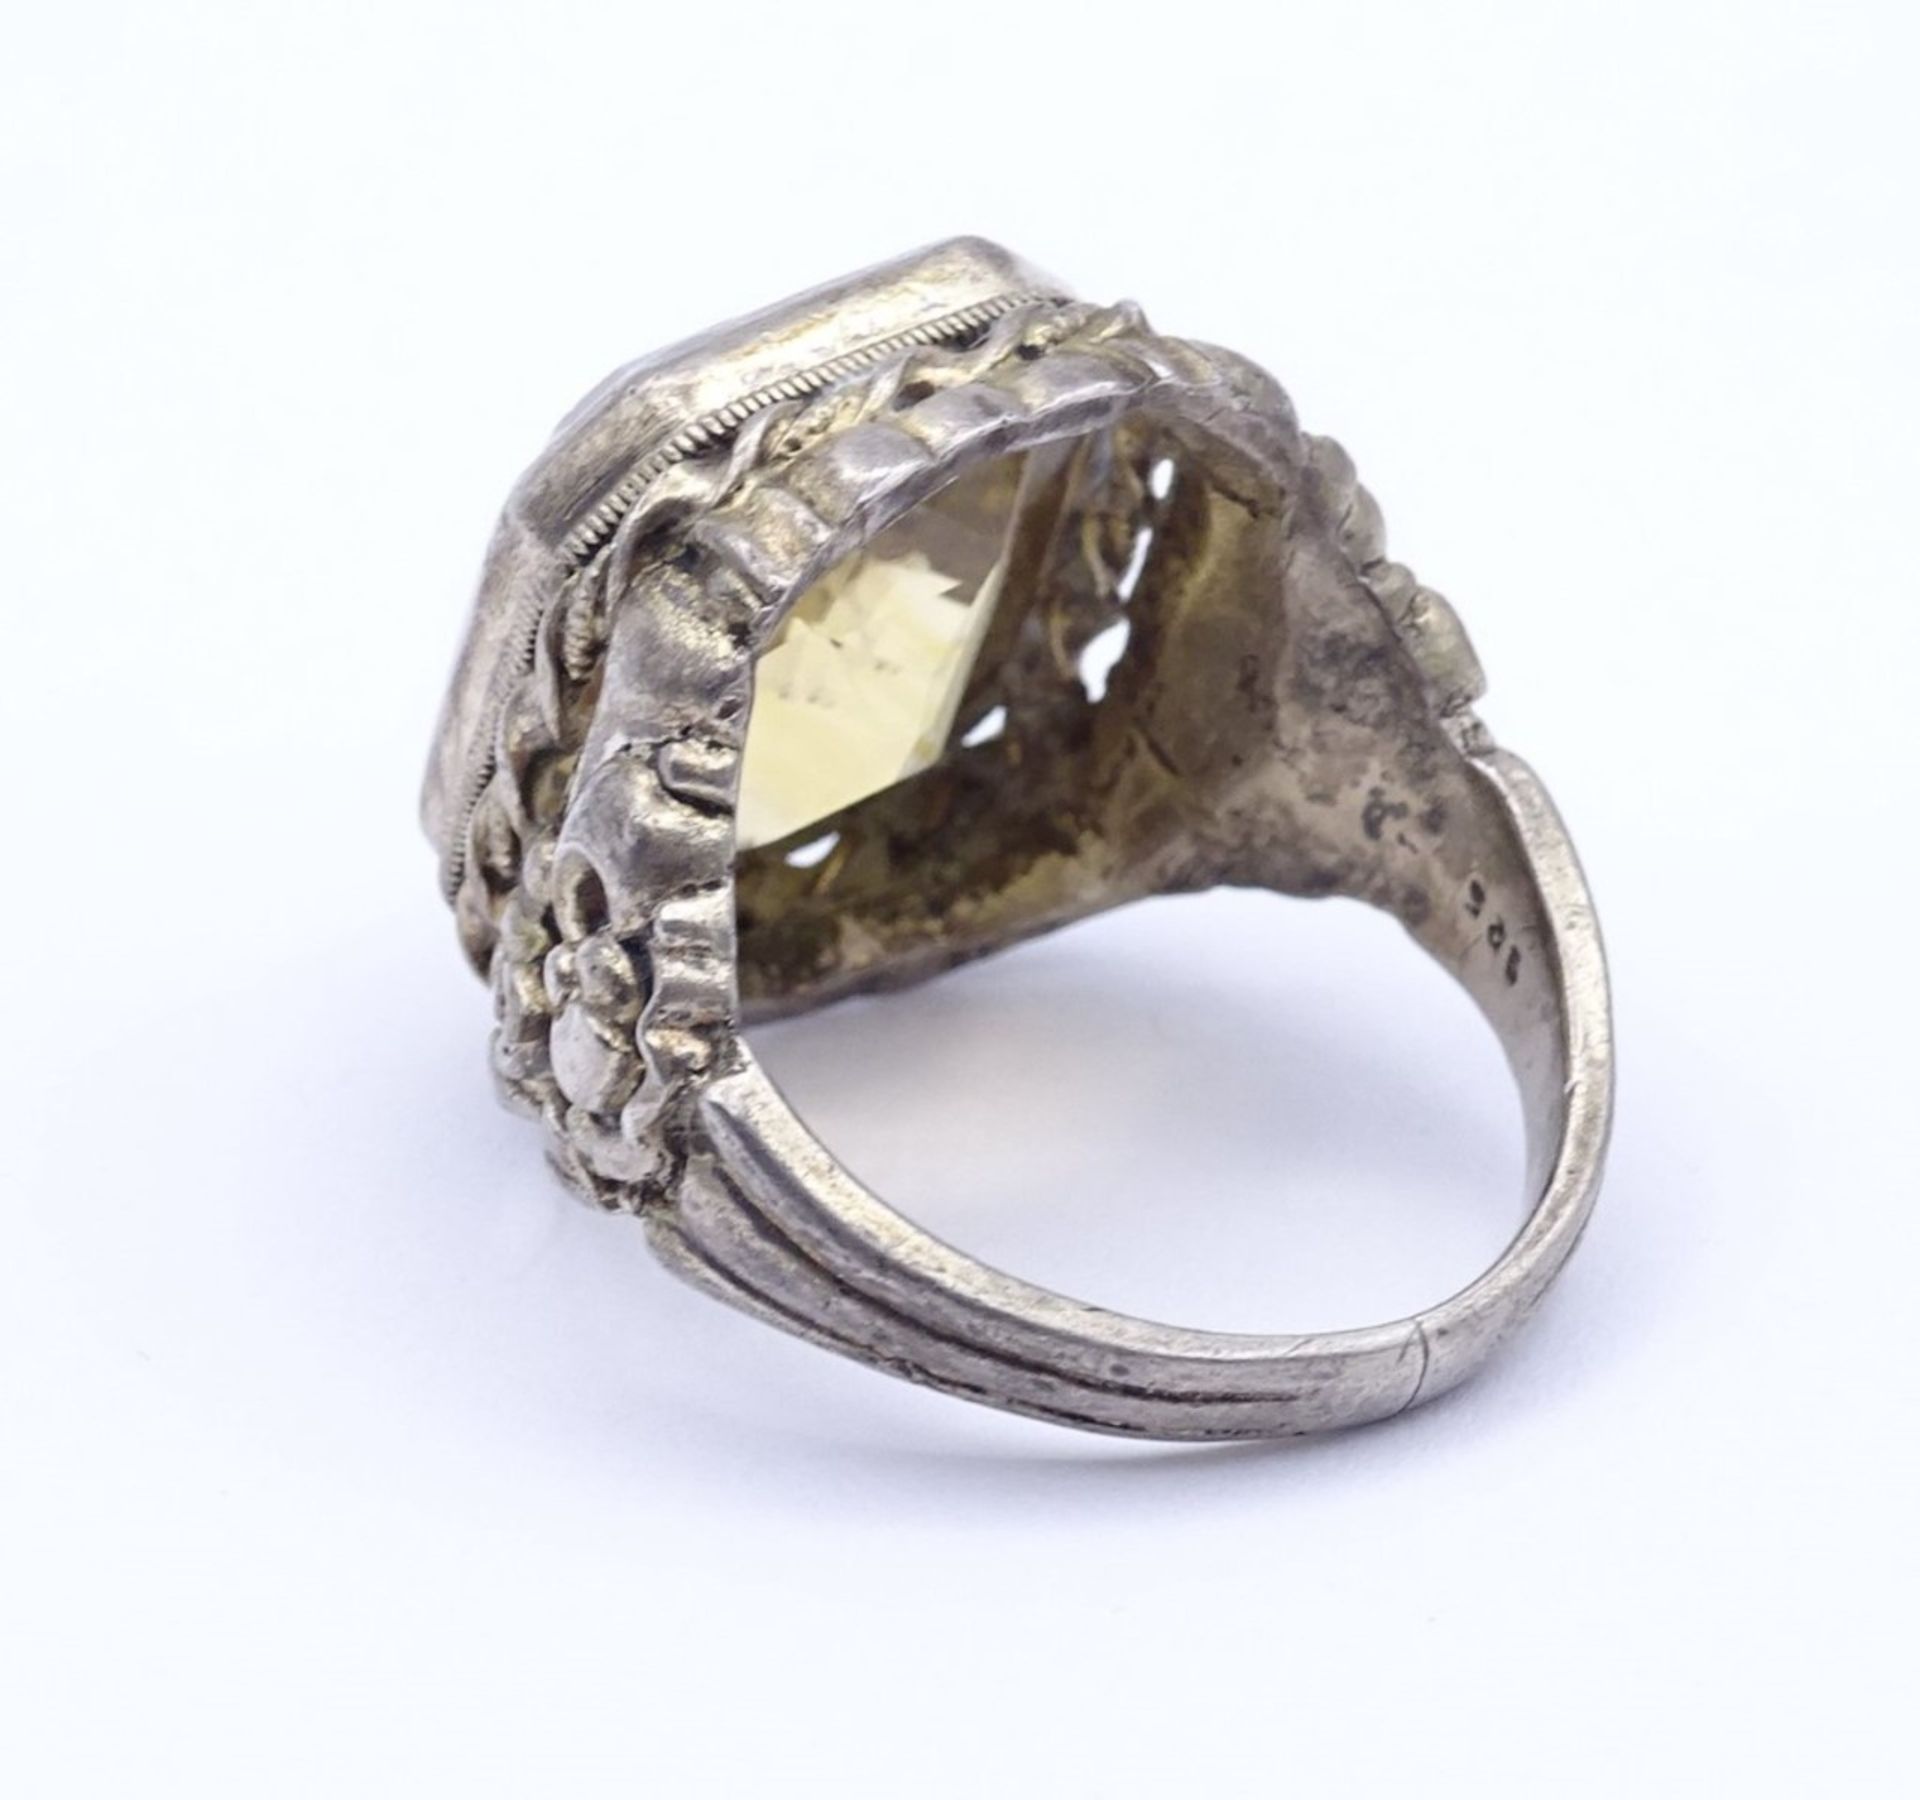 Alter Herren Ring mit großen facc. Citrin,Rosenmuster, 14,50 g., RG 61/62,Sterling Silber 0.925, - Bild 4 aus 4